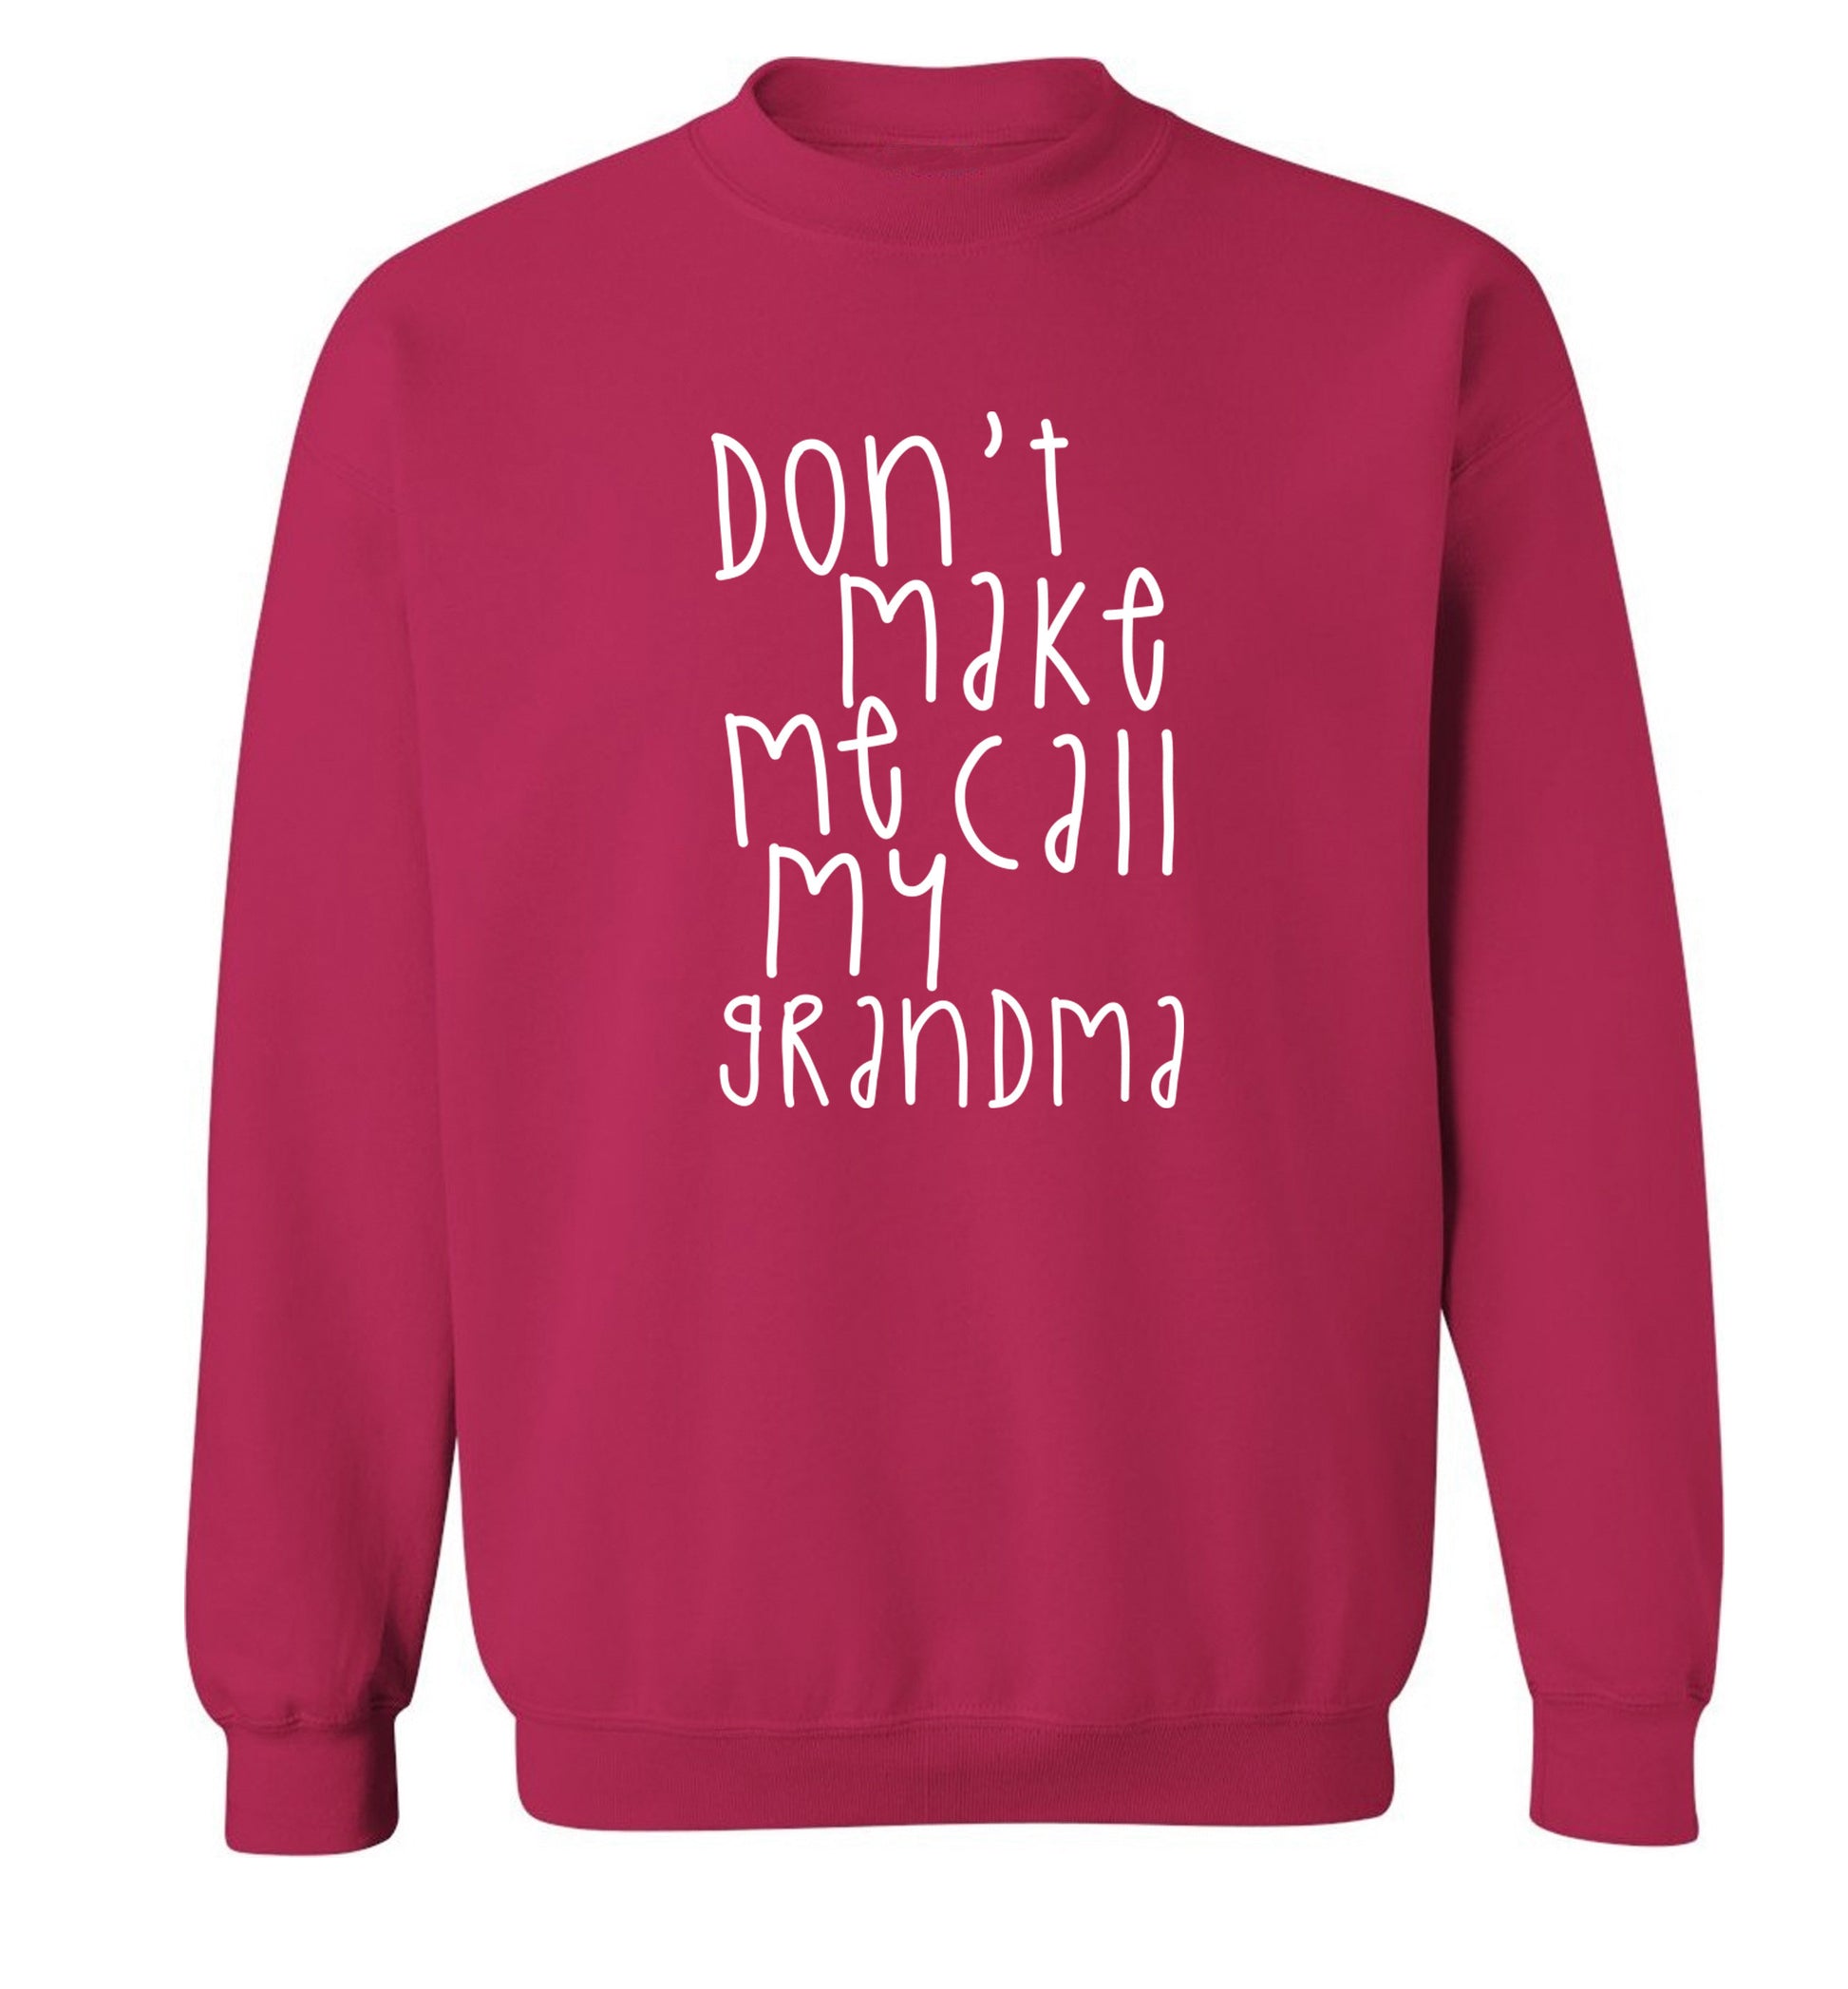 Don't make me call my grandma Adult's unisex pink Sweater 2XL